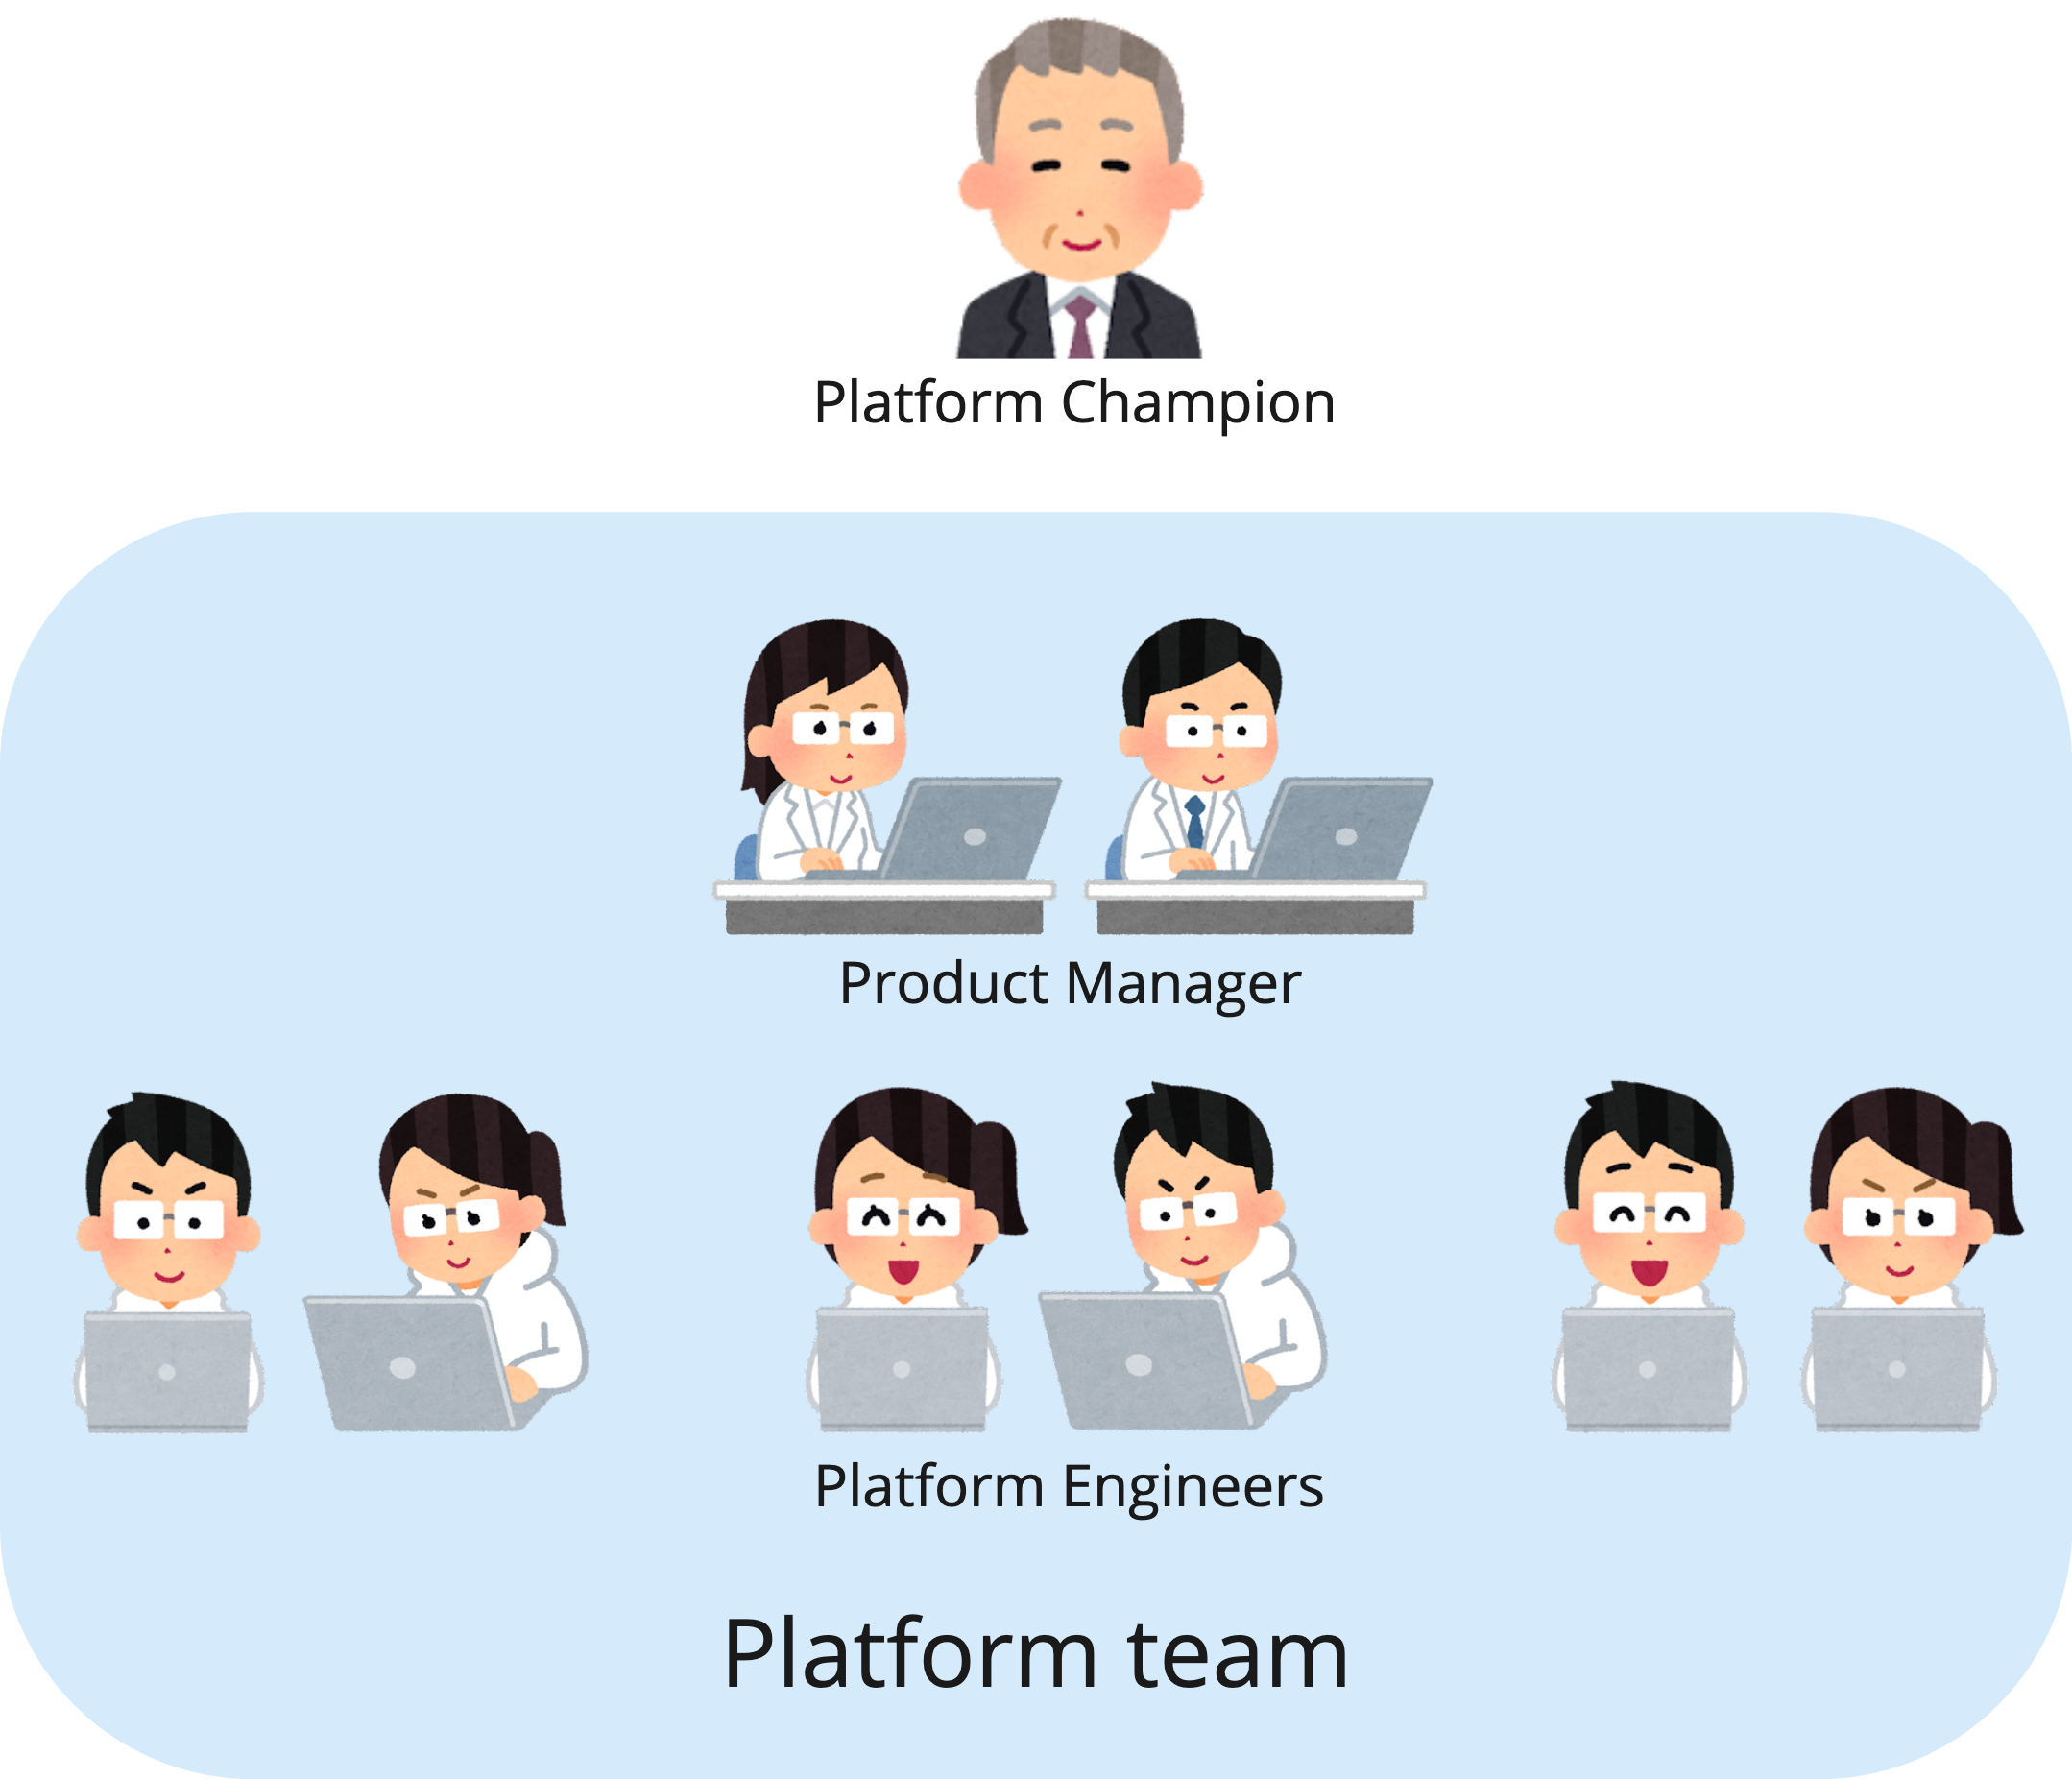 a Platform Team